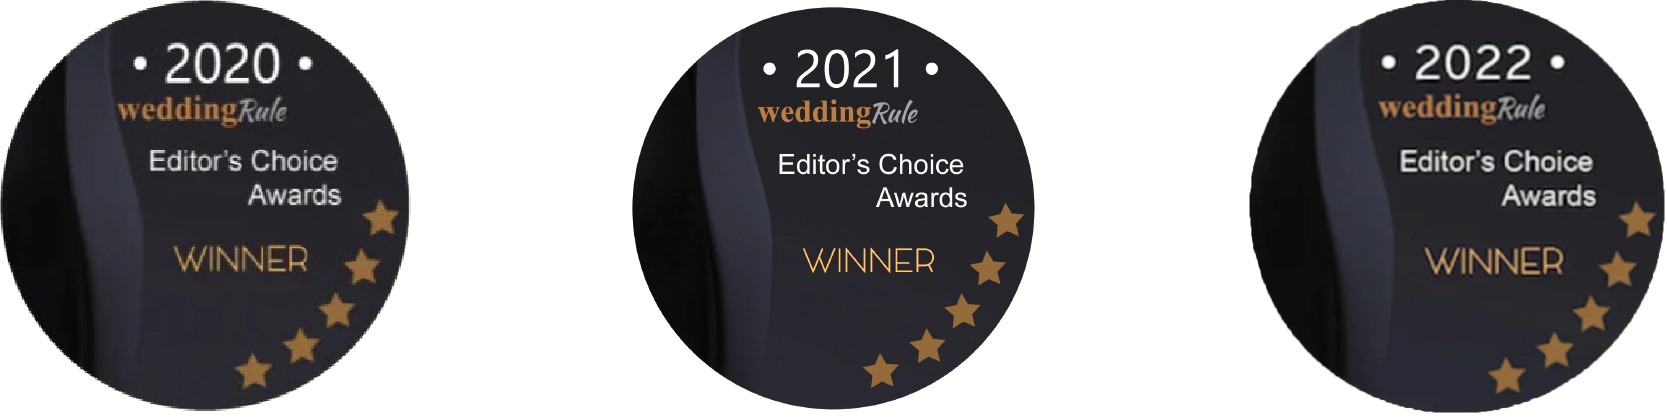 editors choice awards 2020